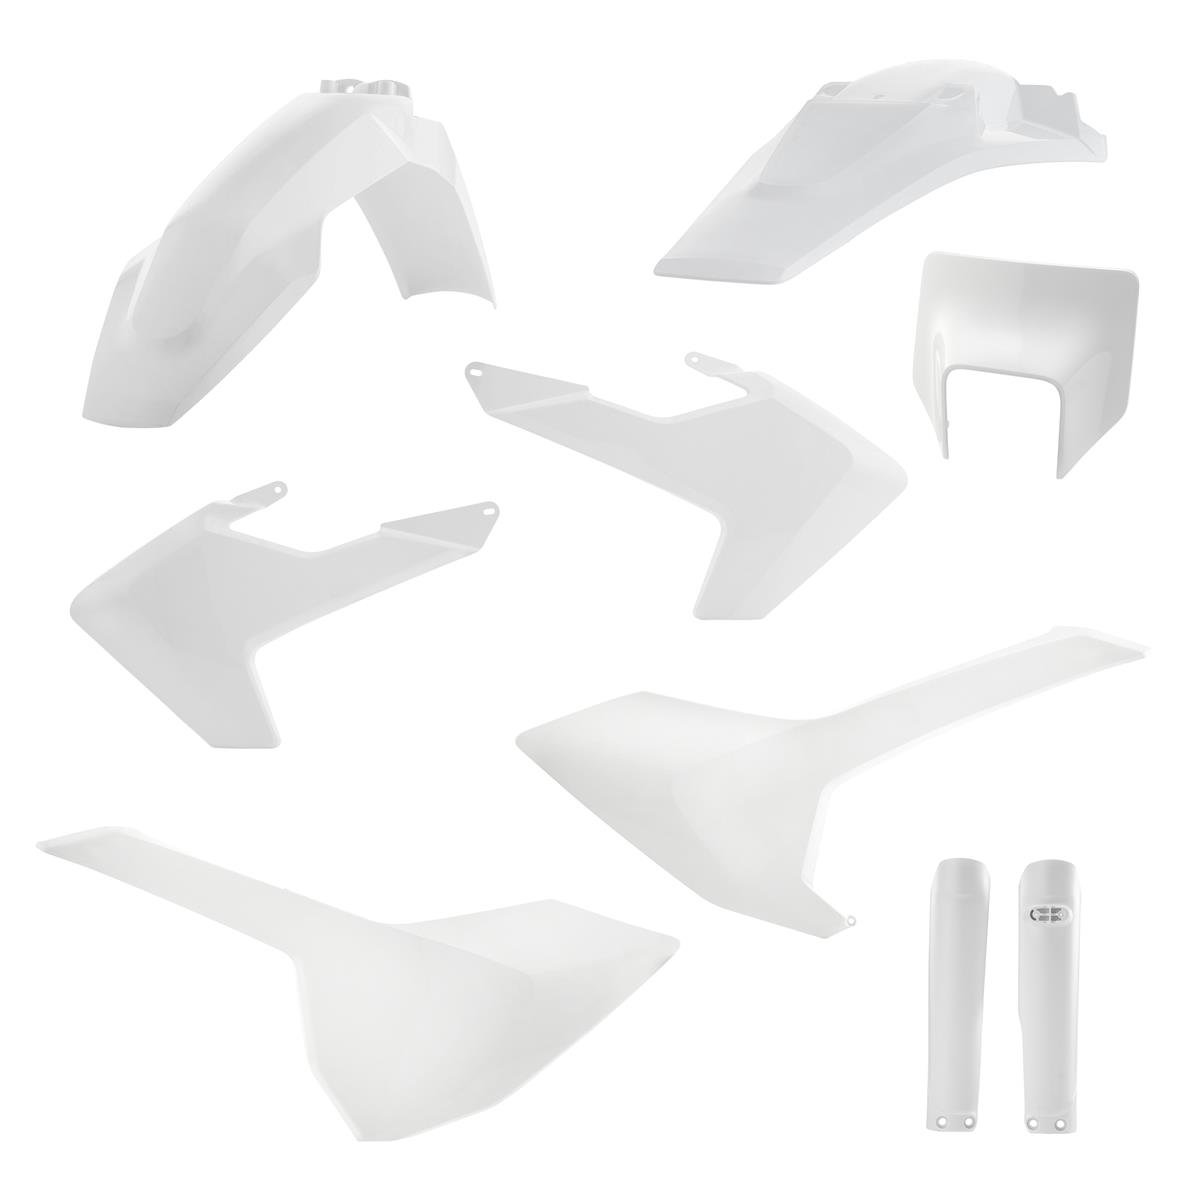 Acerbis Kit Plastiche completo Full-Kit Husqvarna FE/TE/TX 17-19, Bianco